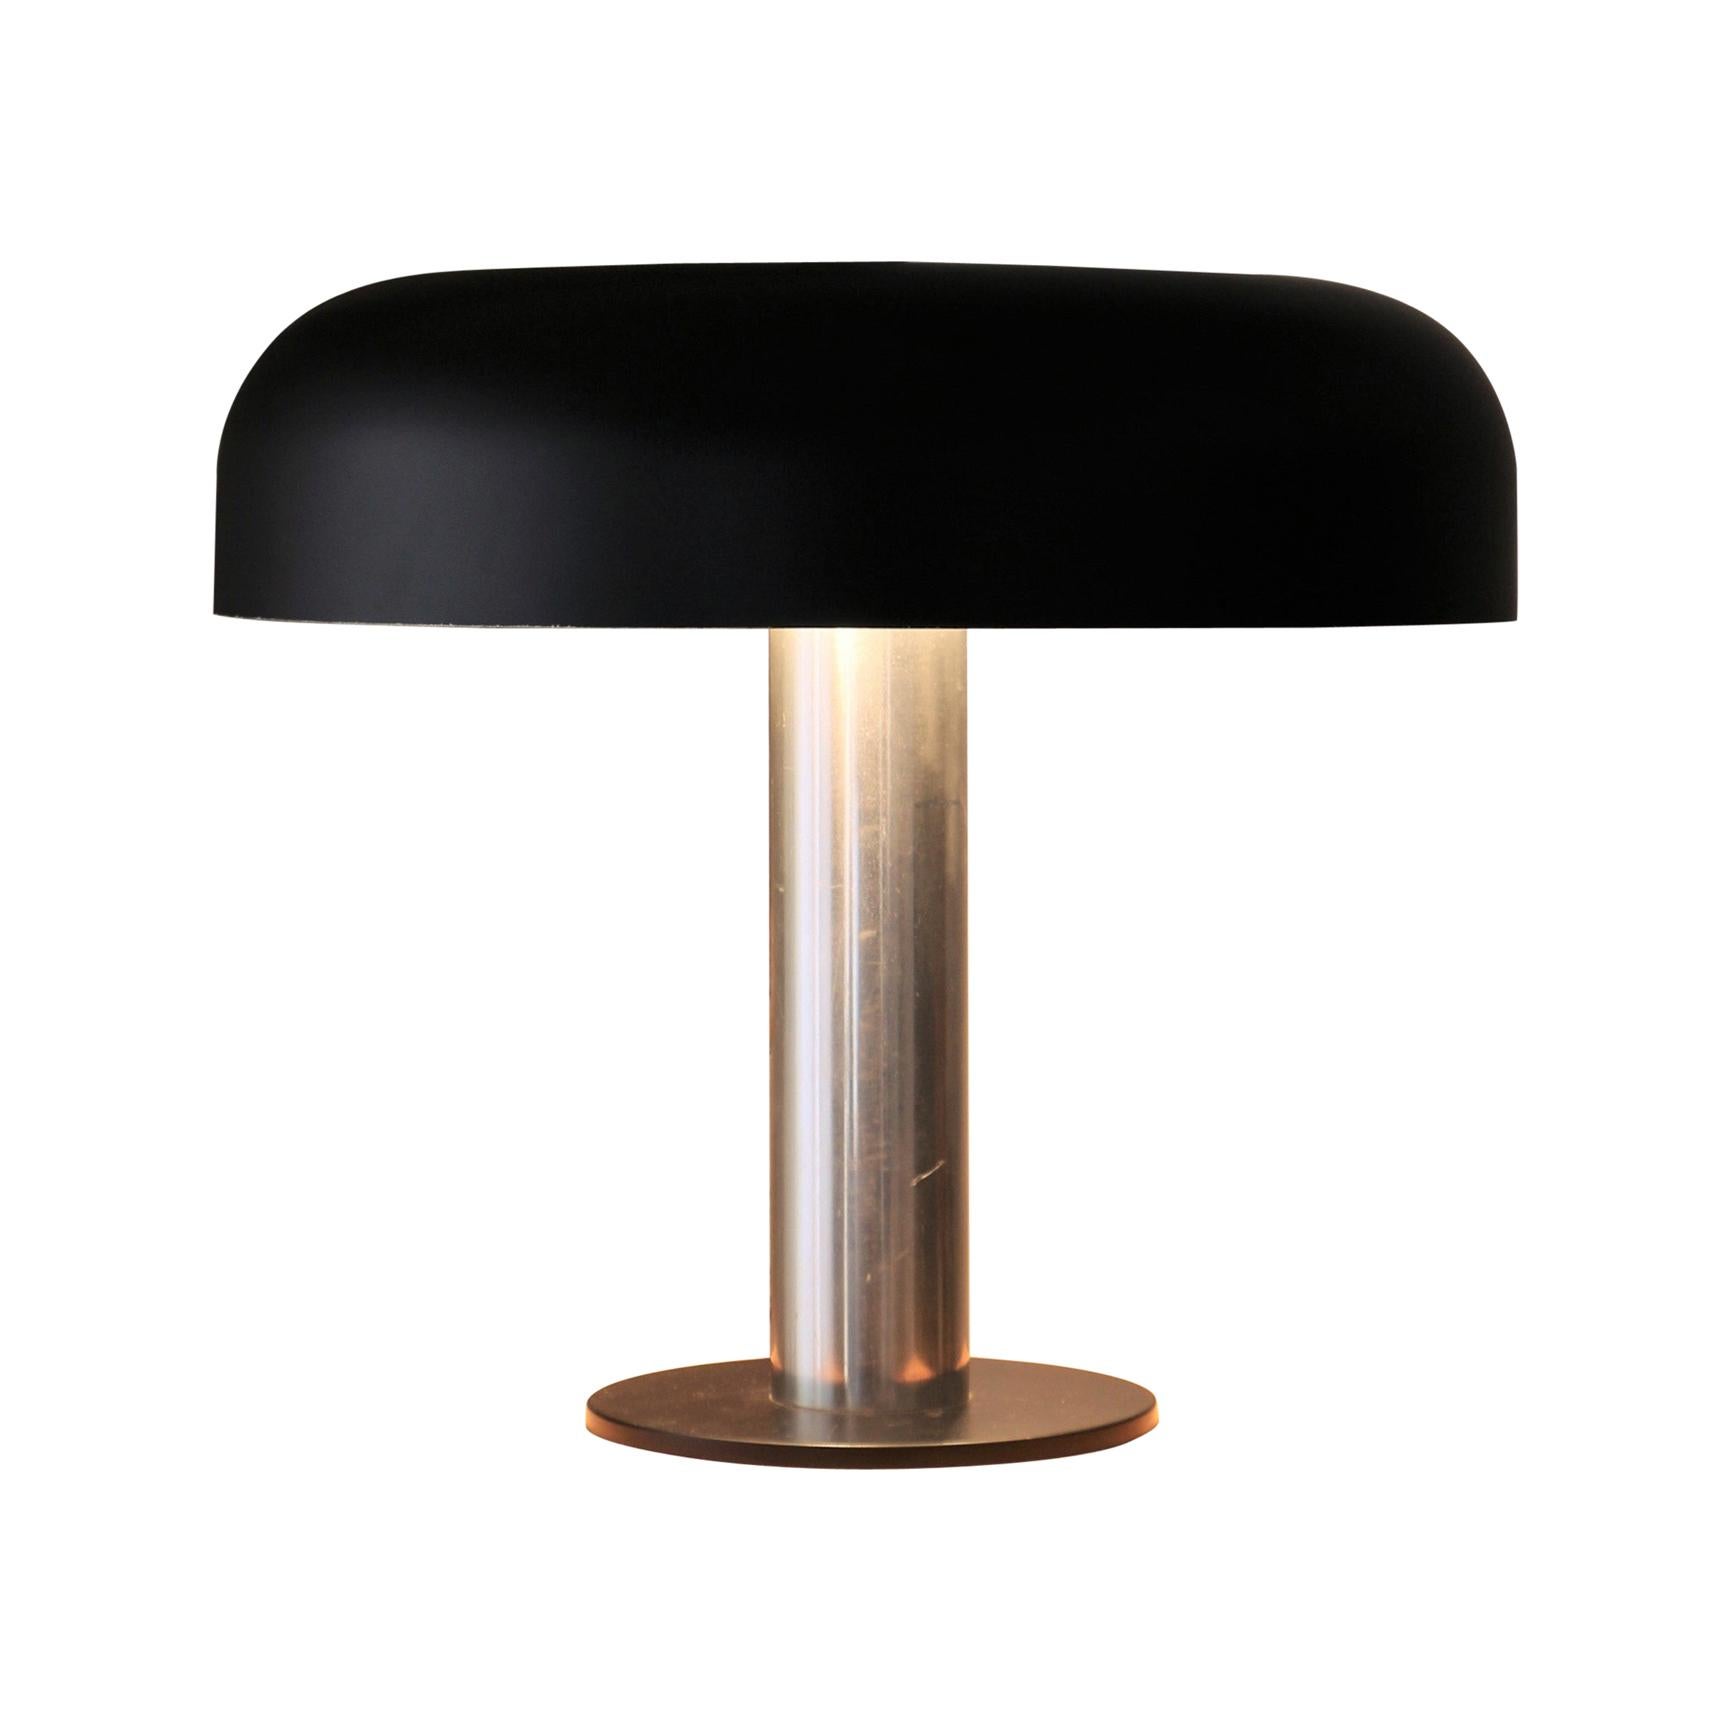 Back "Mushroom" Lamp